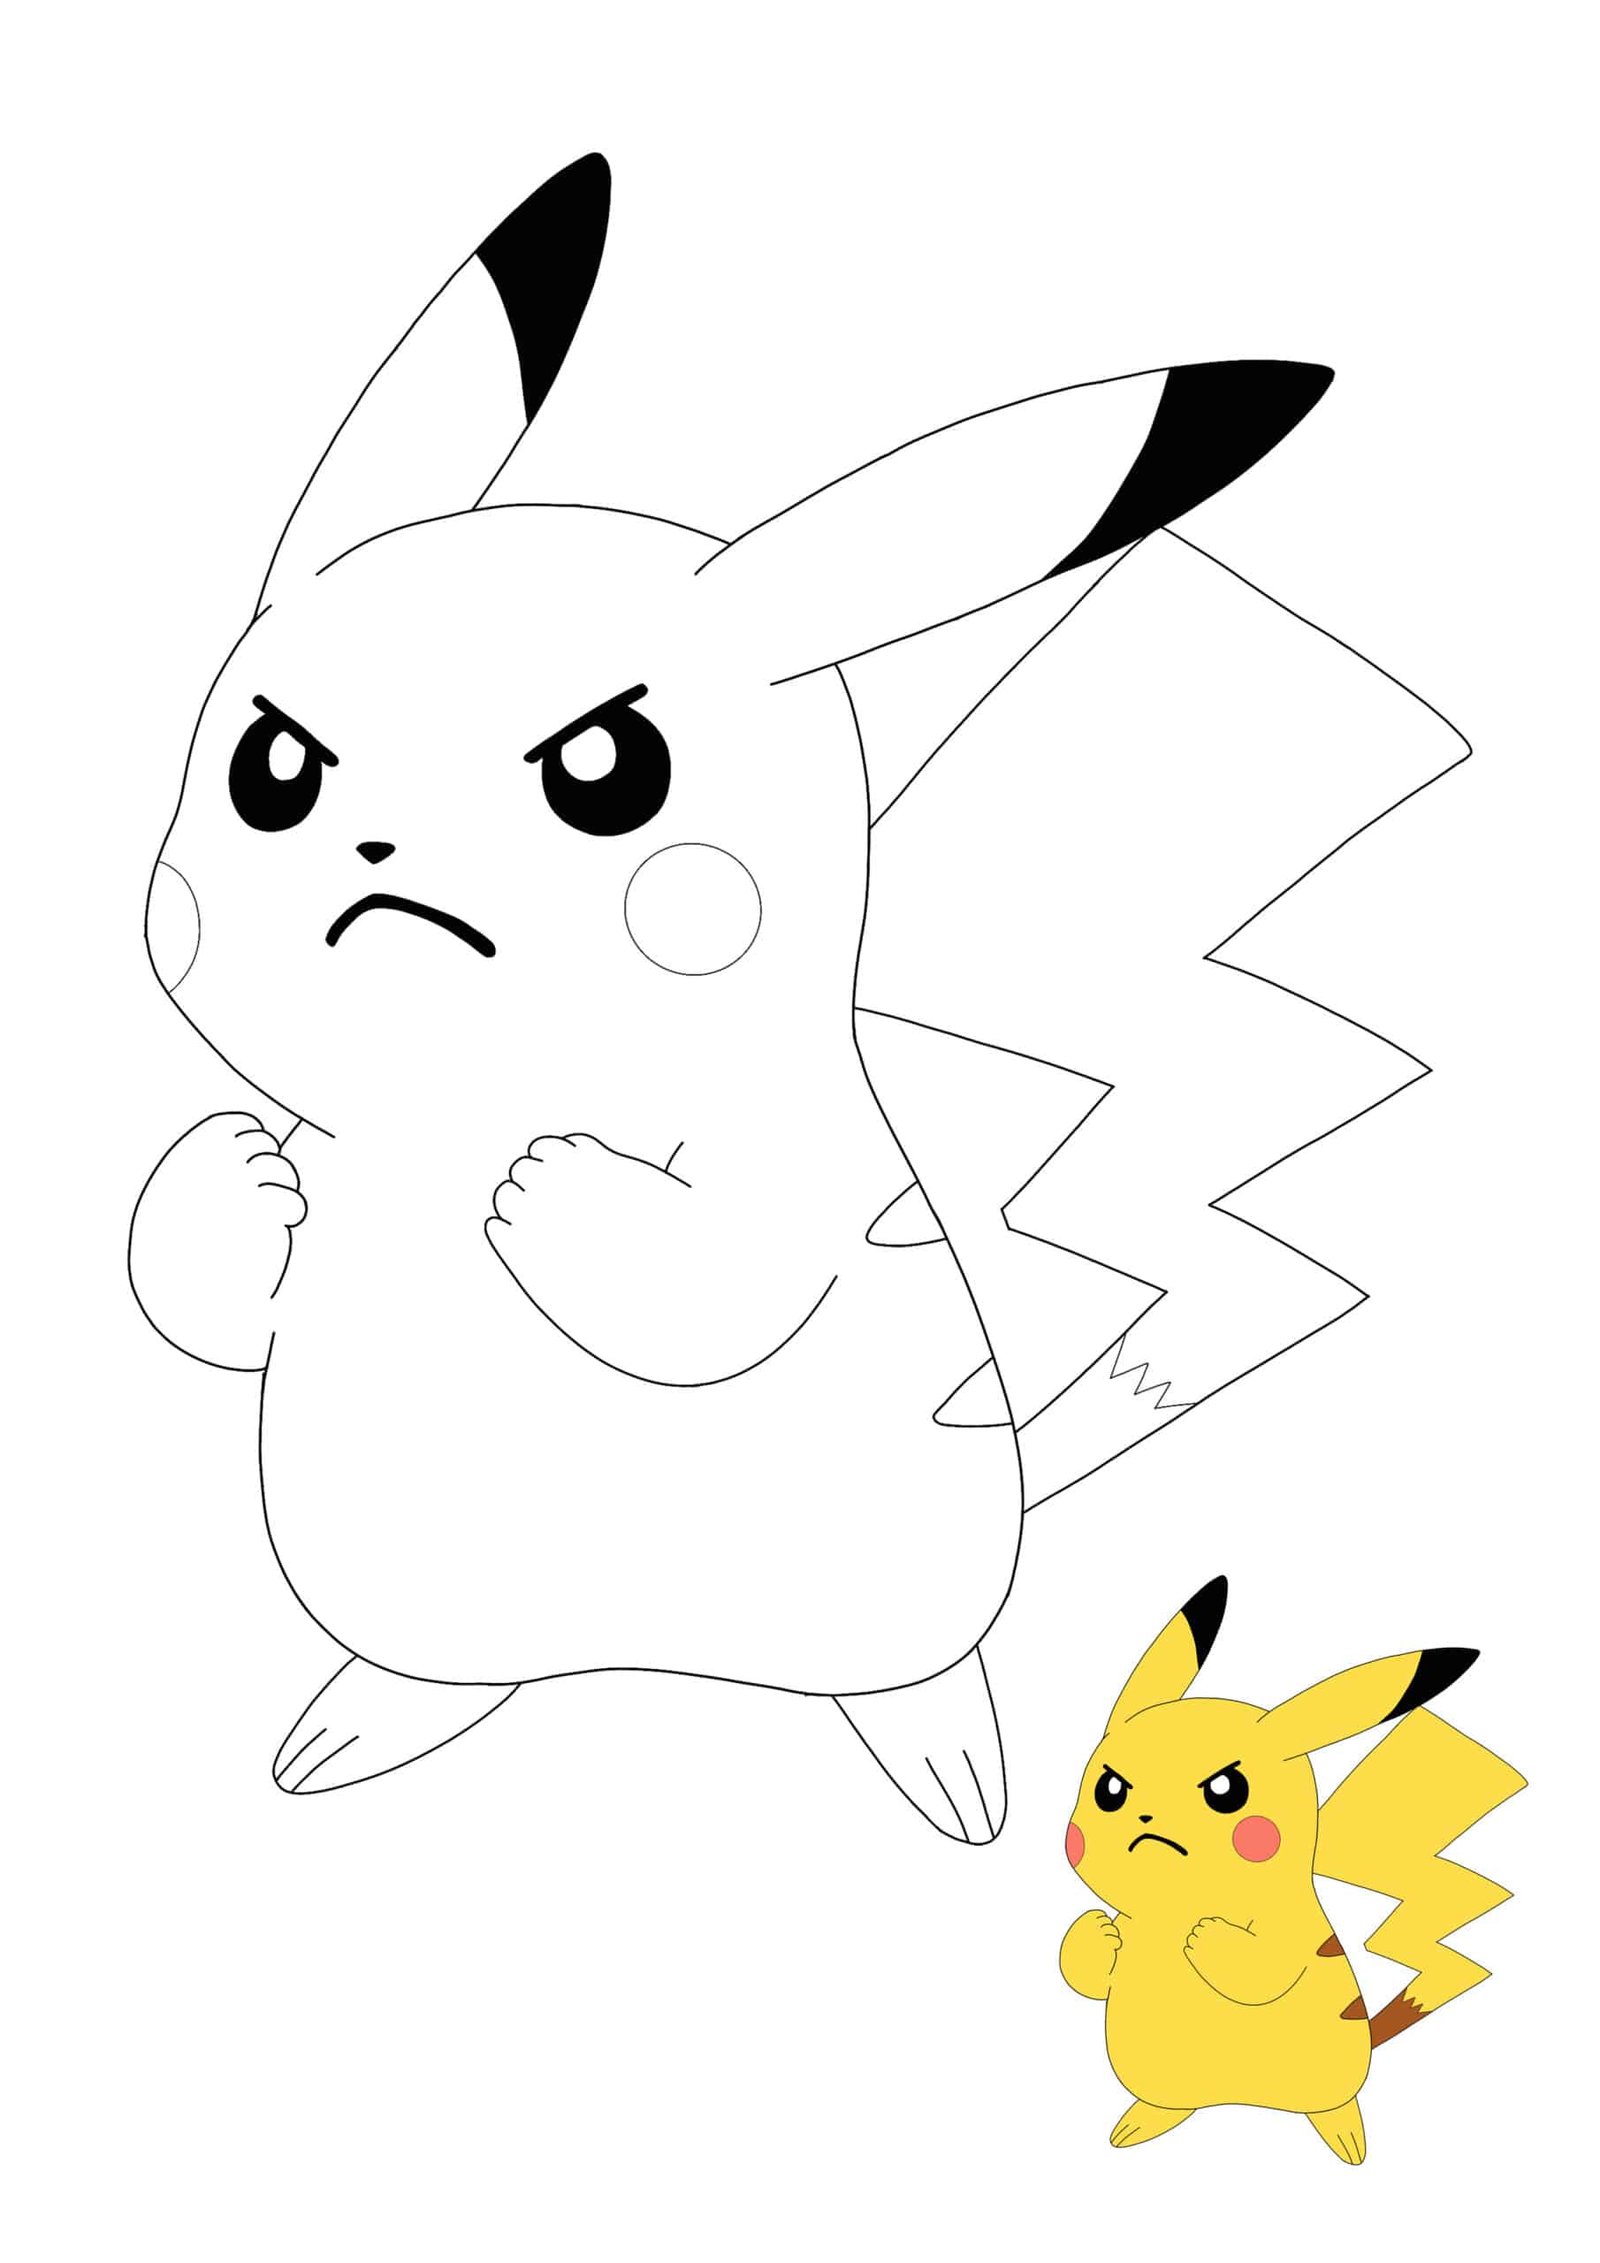 Angry Pokemon Pikachu coloring sheet